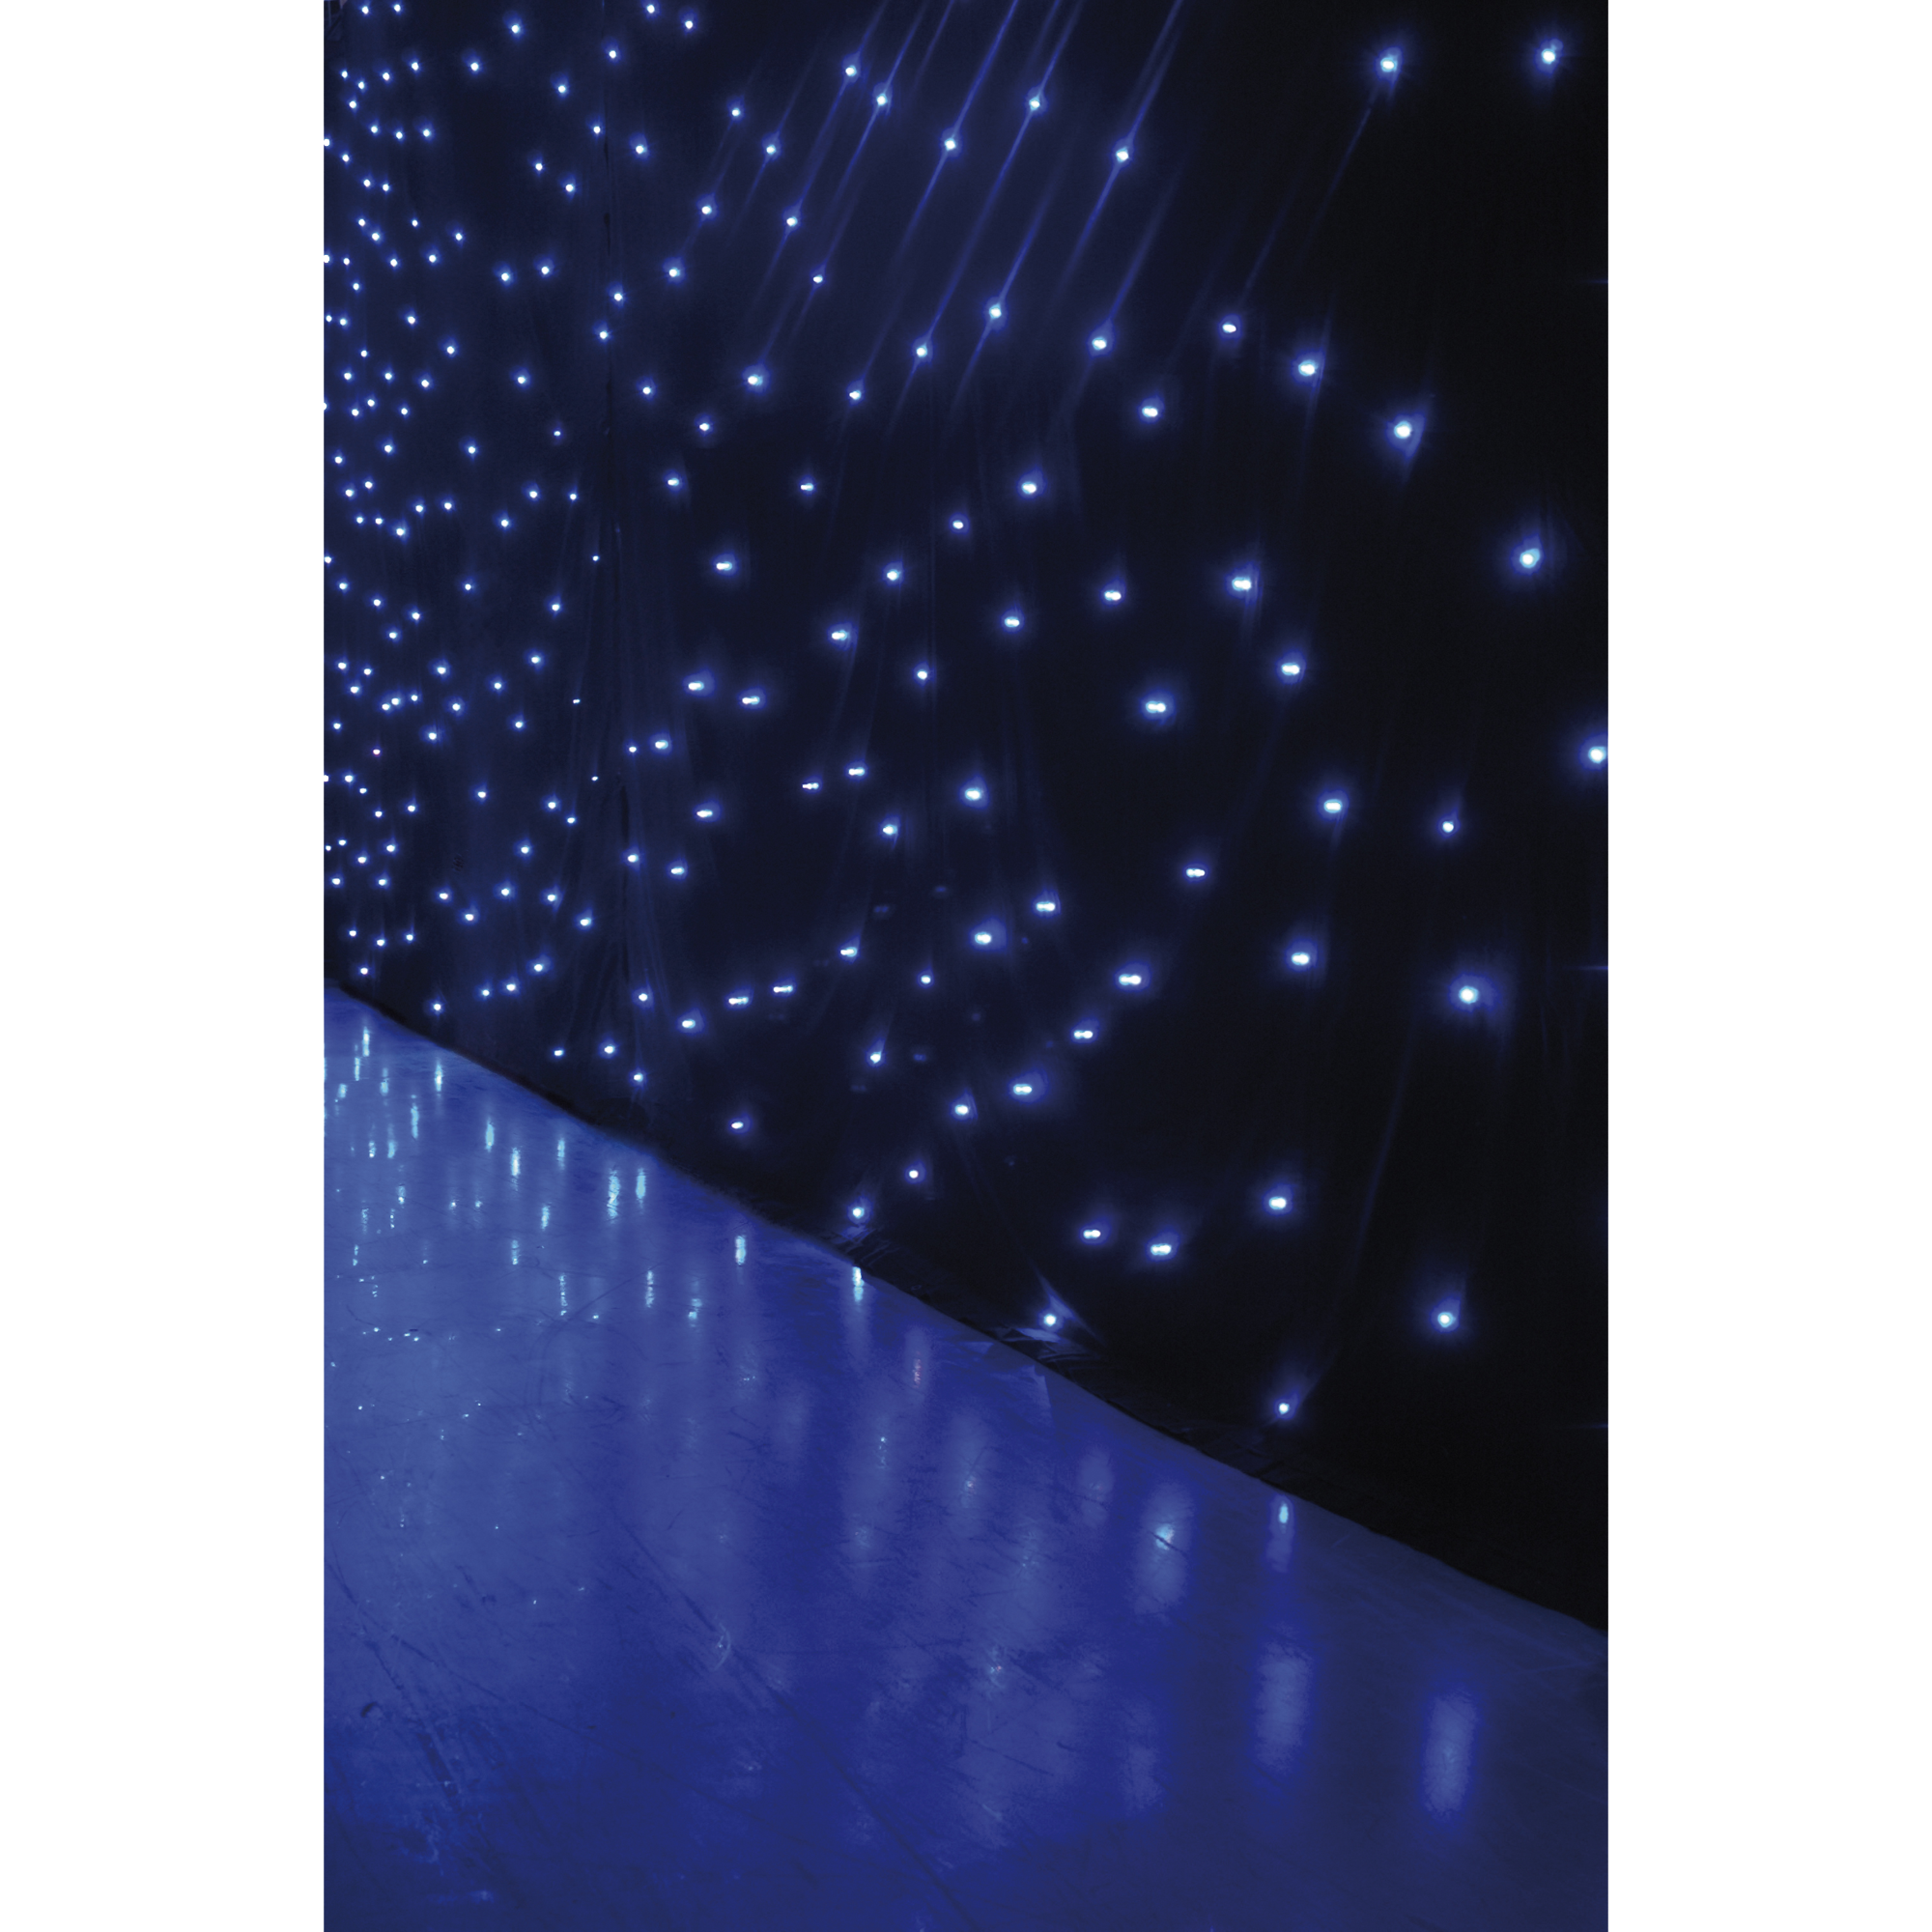 Showtec Star Dream 6 x 4 m - 192 white LEDs - Incl. Controller